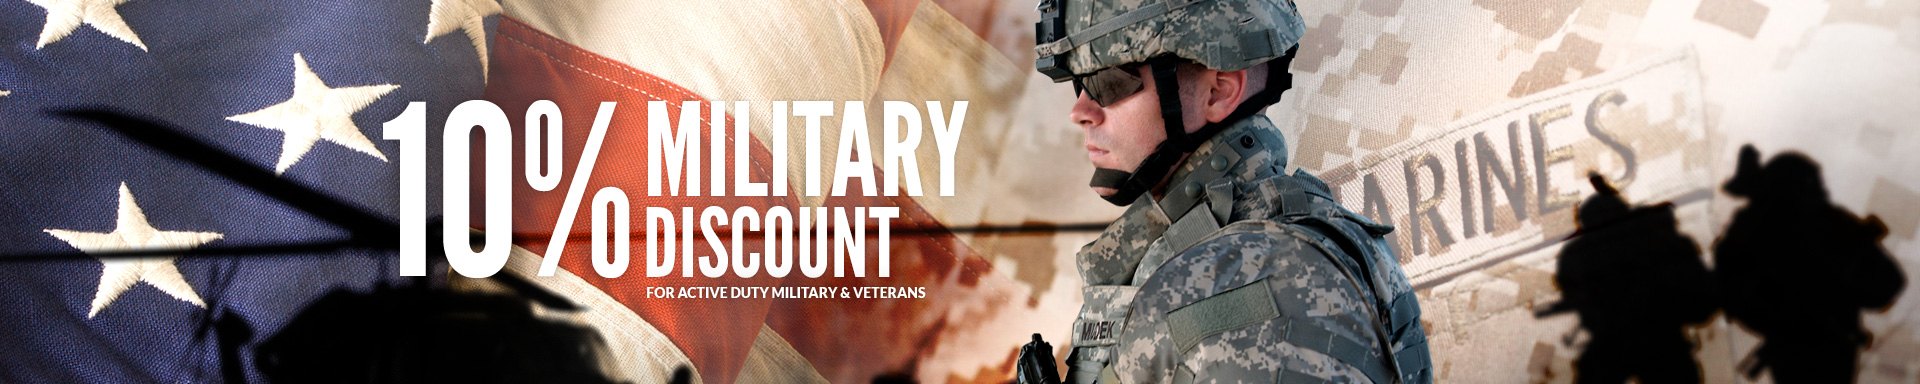 Military Discounts at BOATiD.com